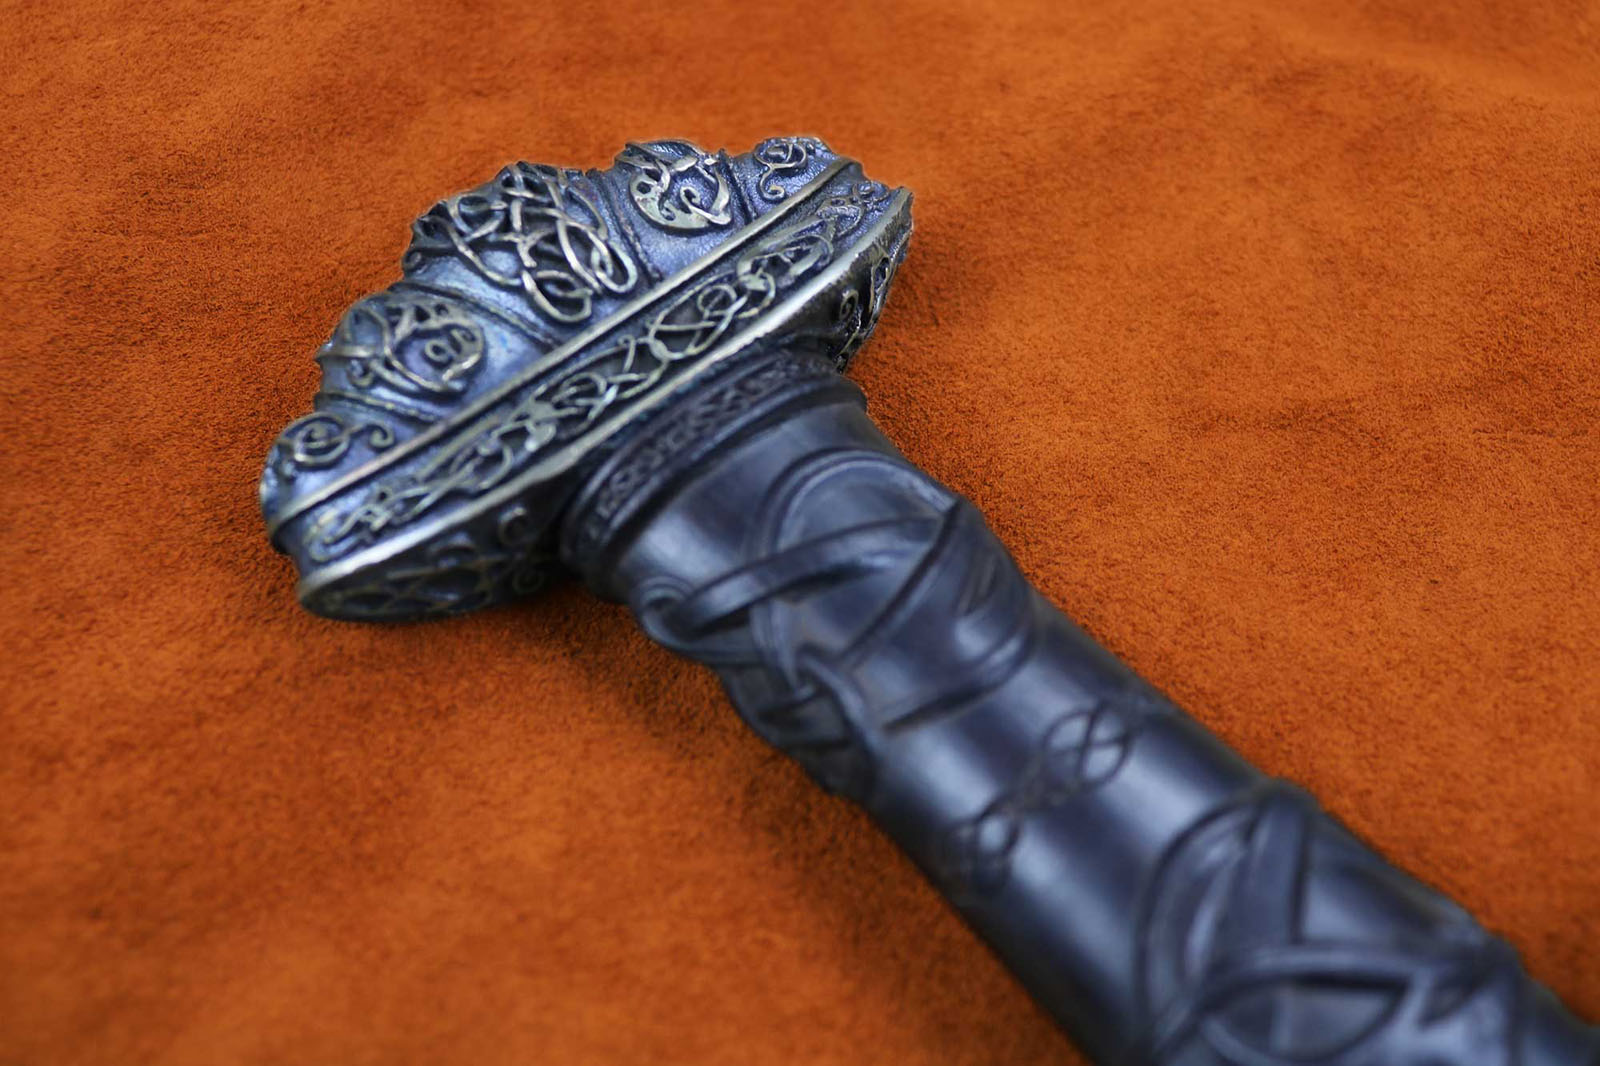 The Urnes Stave Viking Sword